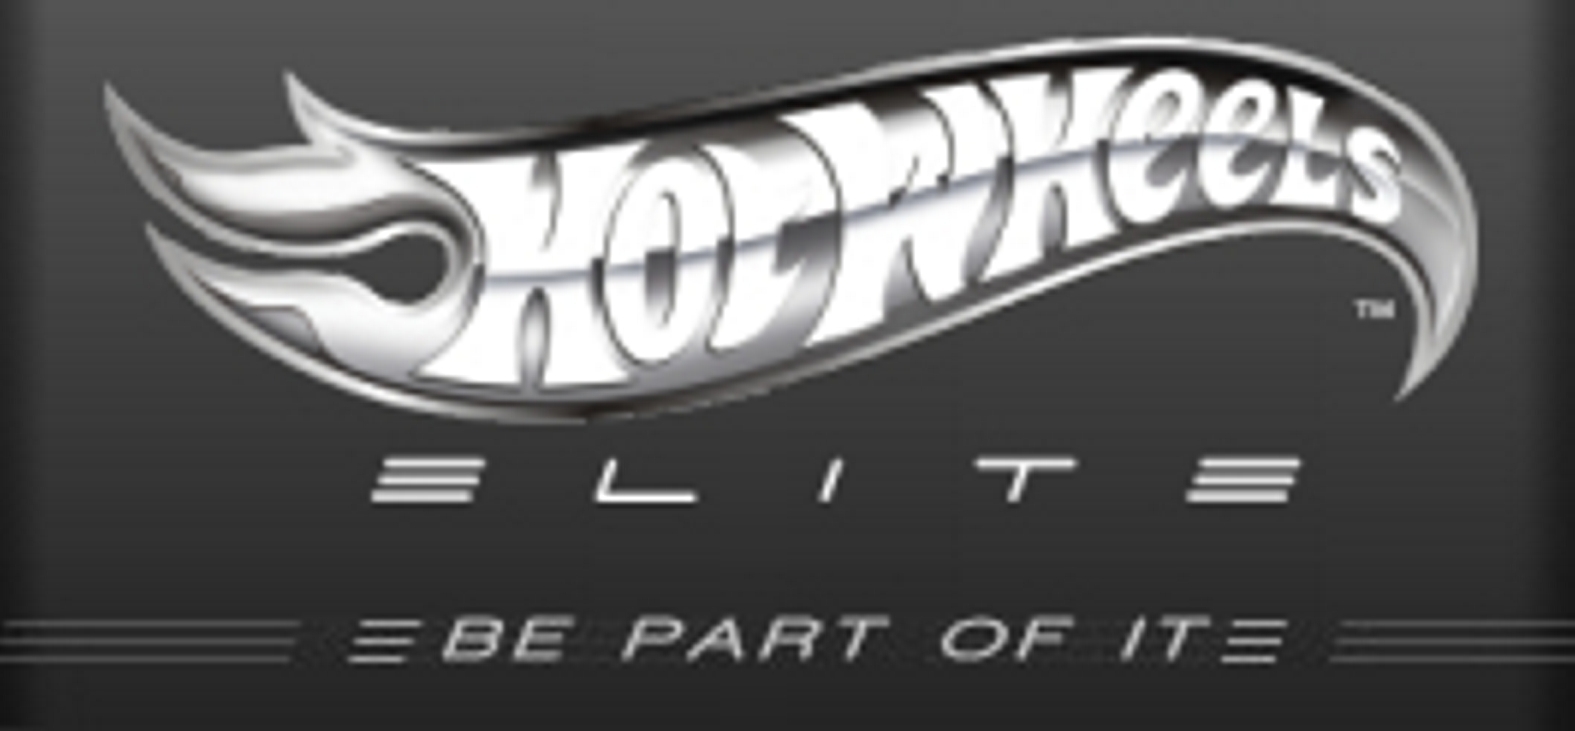 hotwheels-elite-logo.jpg